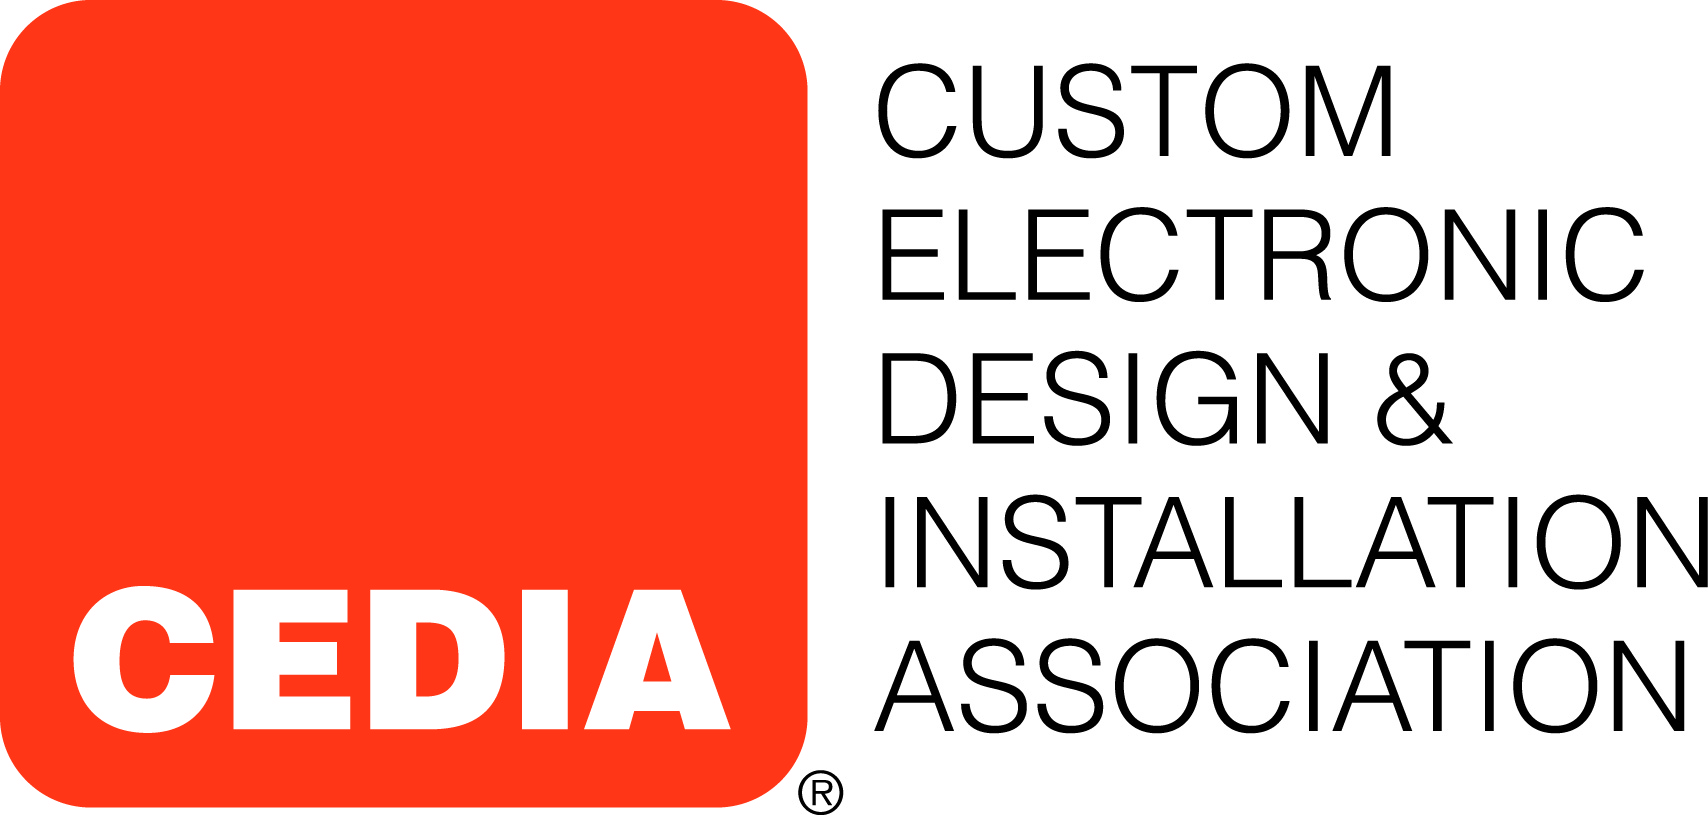 Custom Electronic Design & Installation Association